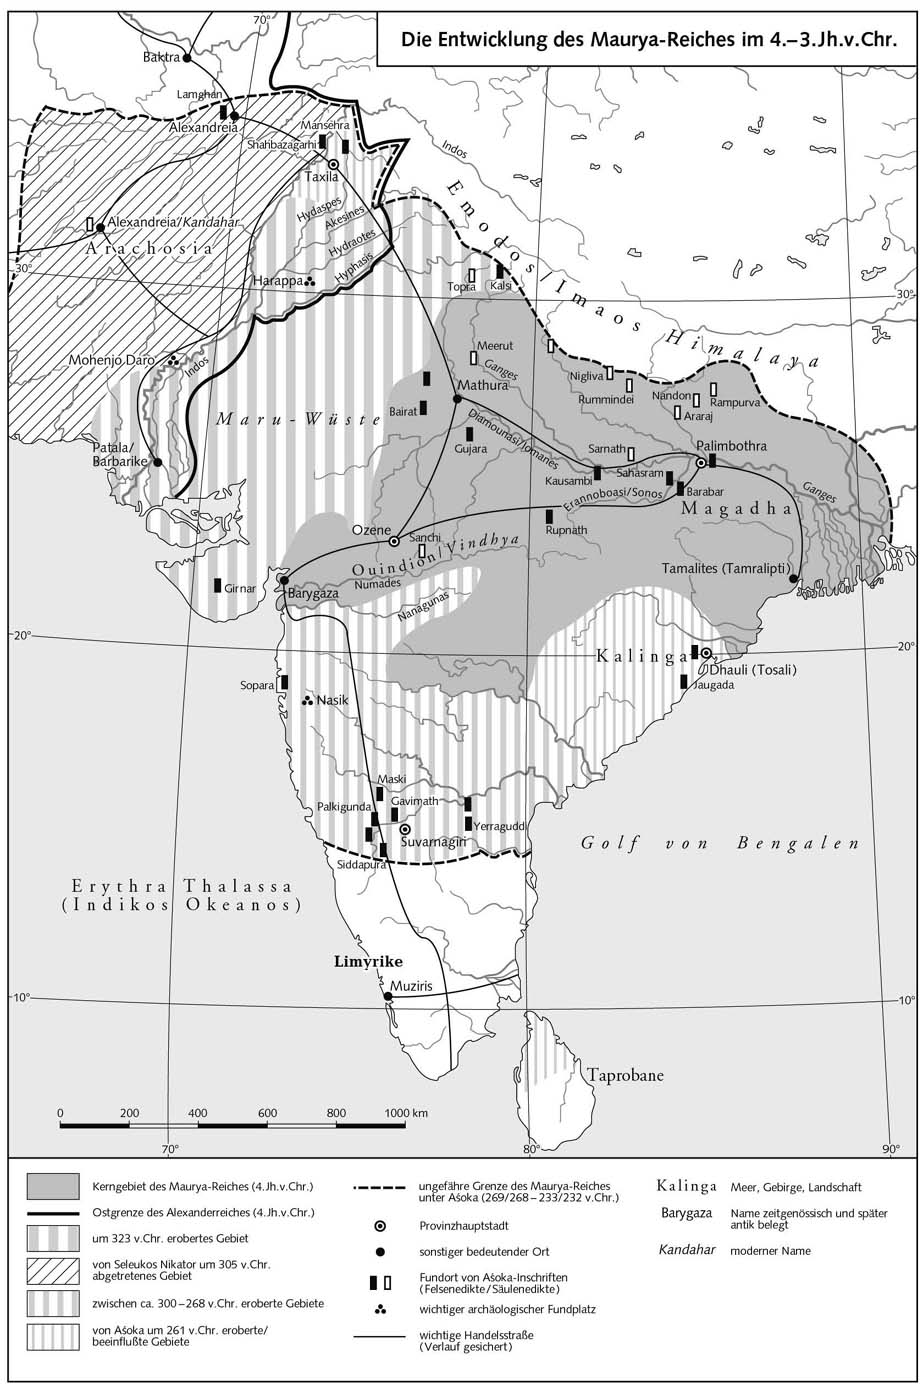 Развитие империи Маурьев (IV-III вв. до н.э.)